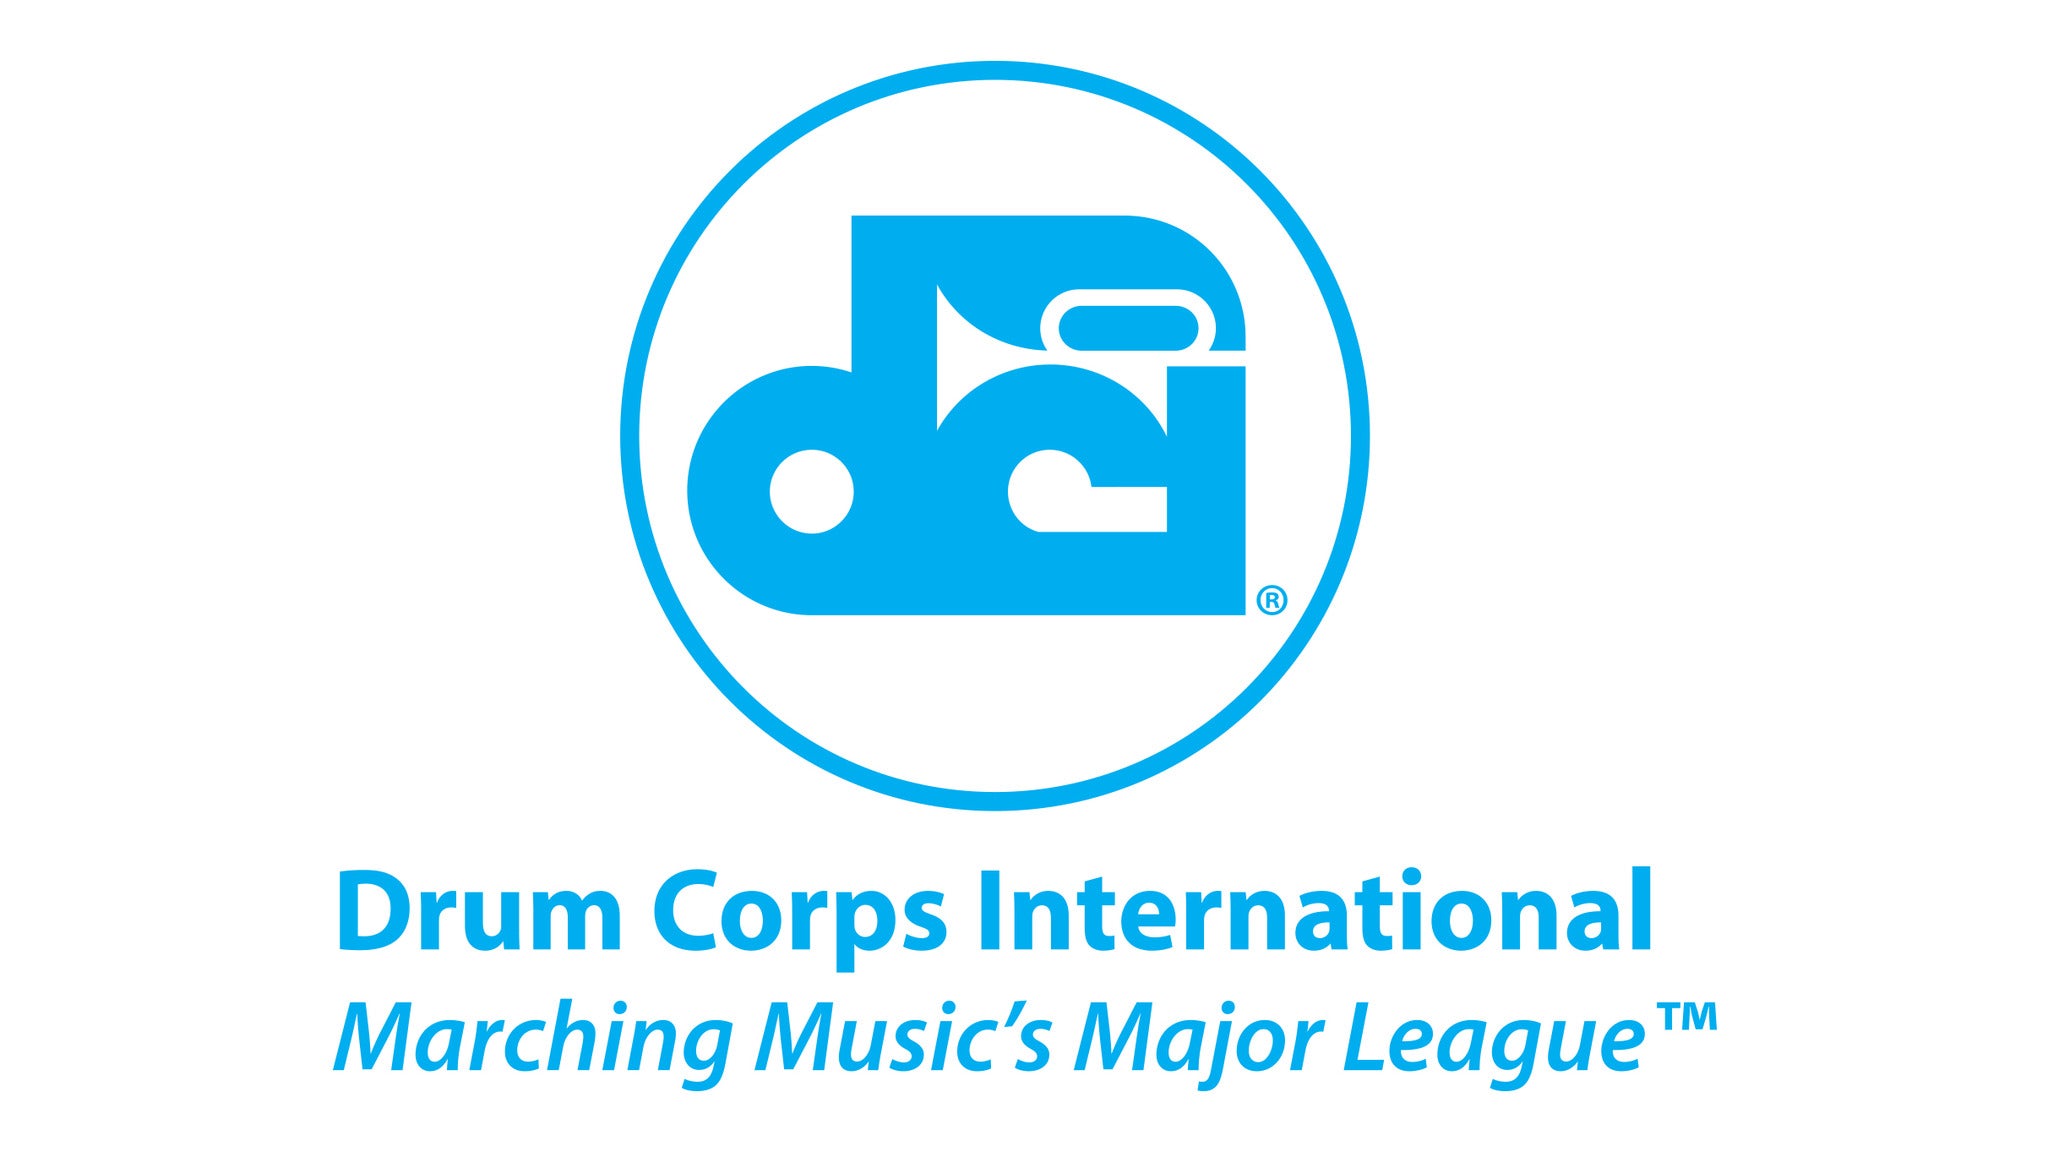 DCI: Drum Corps International presale information on freepresalepasswords.com